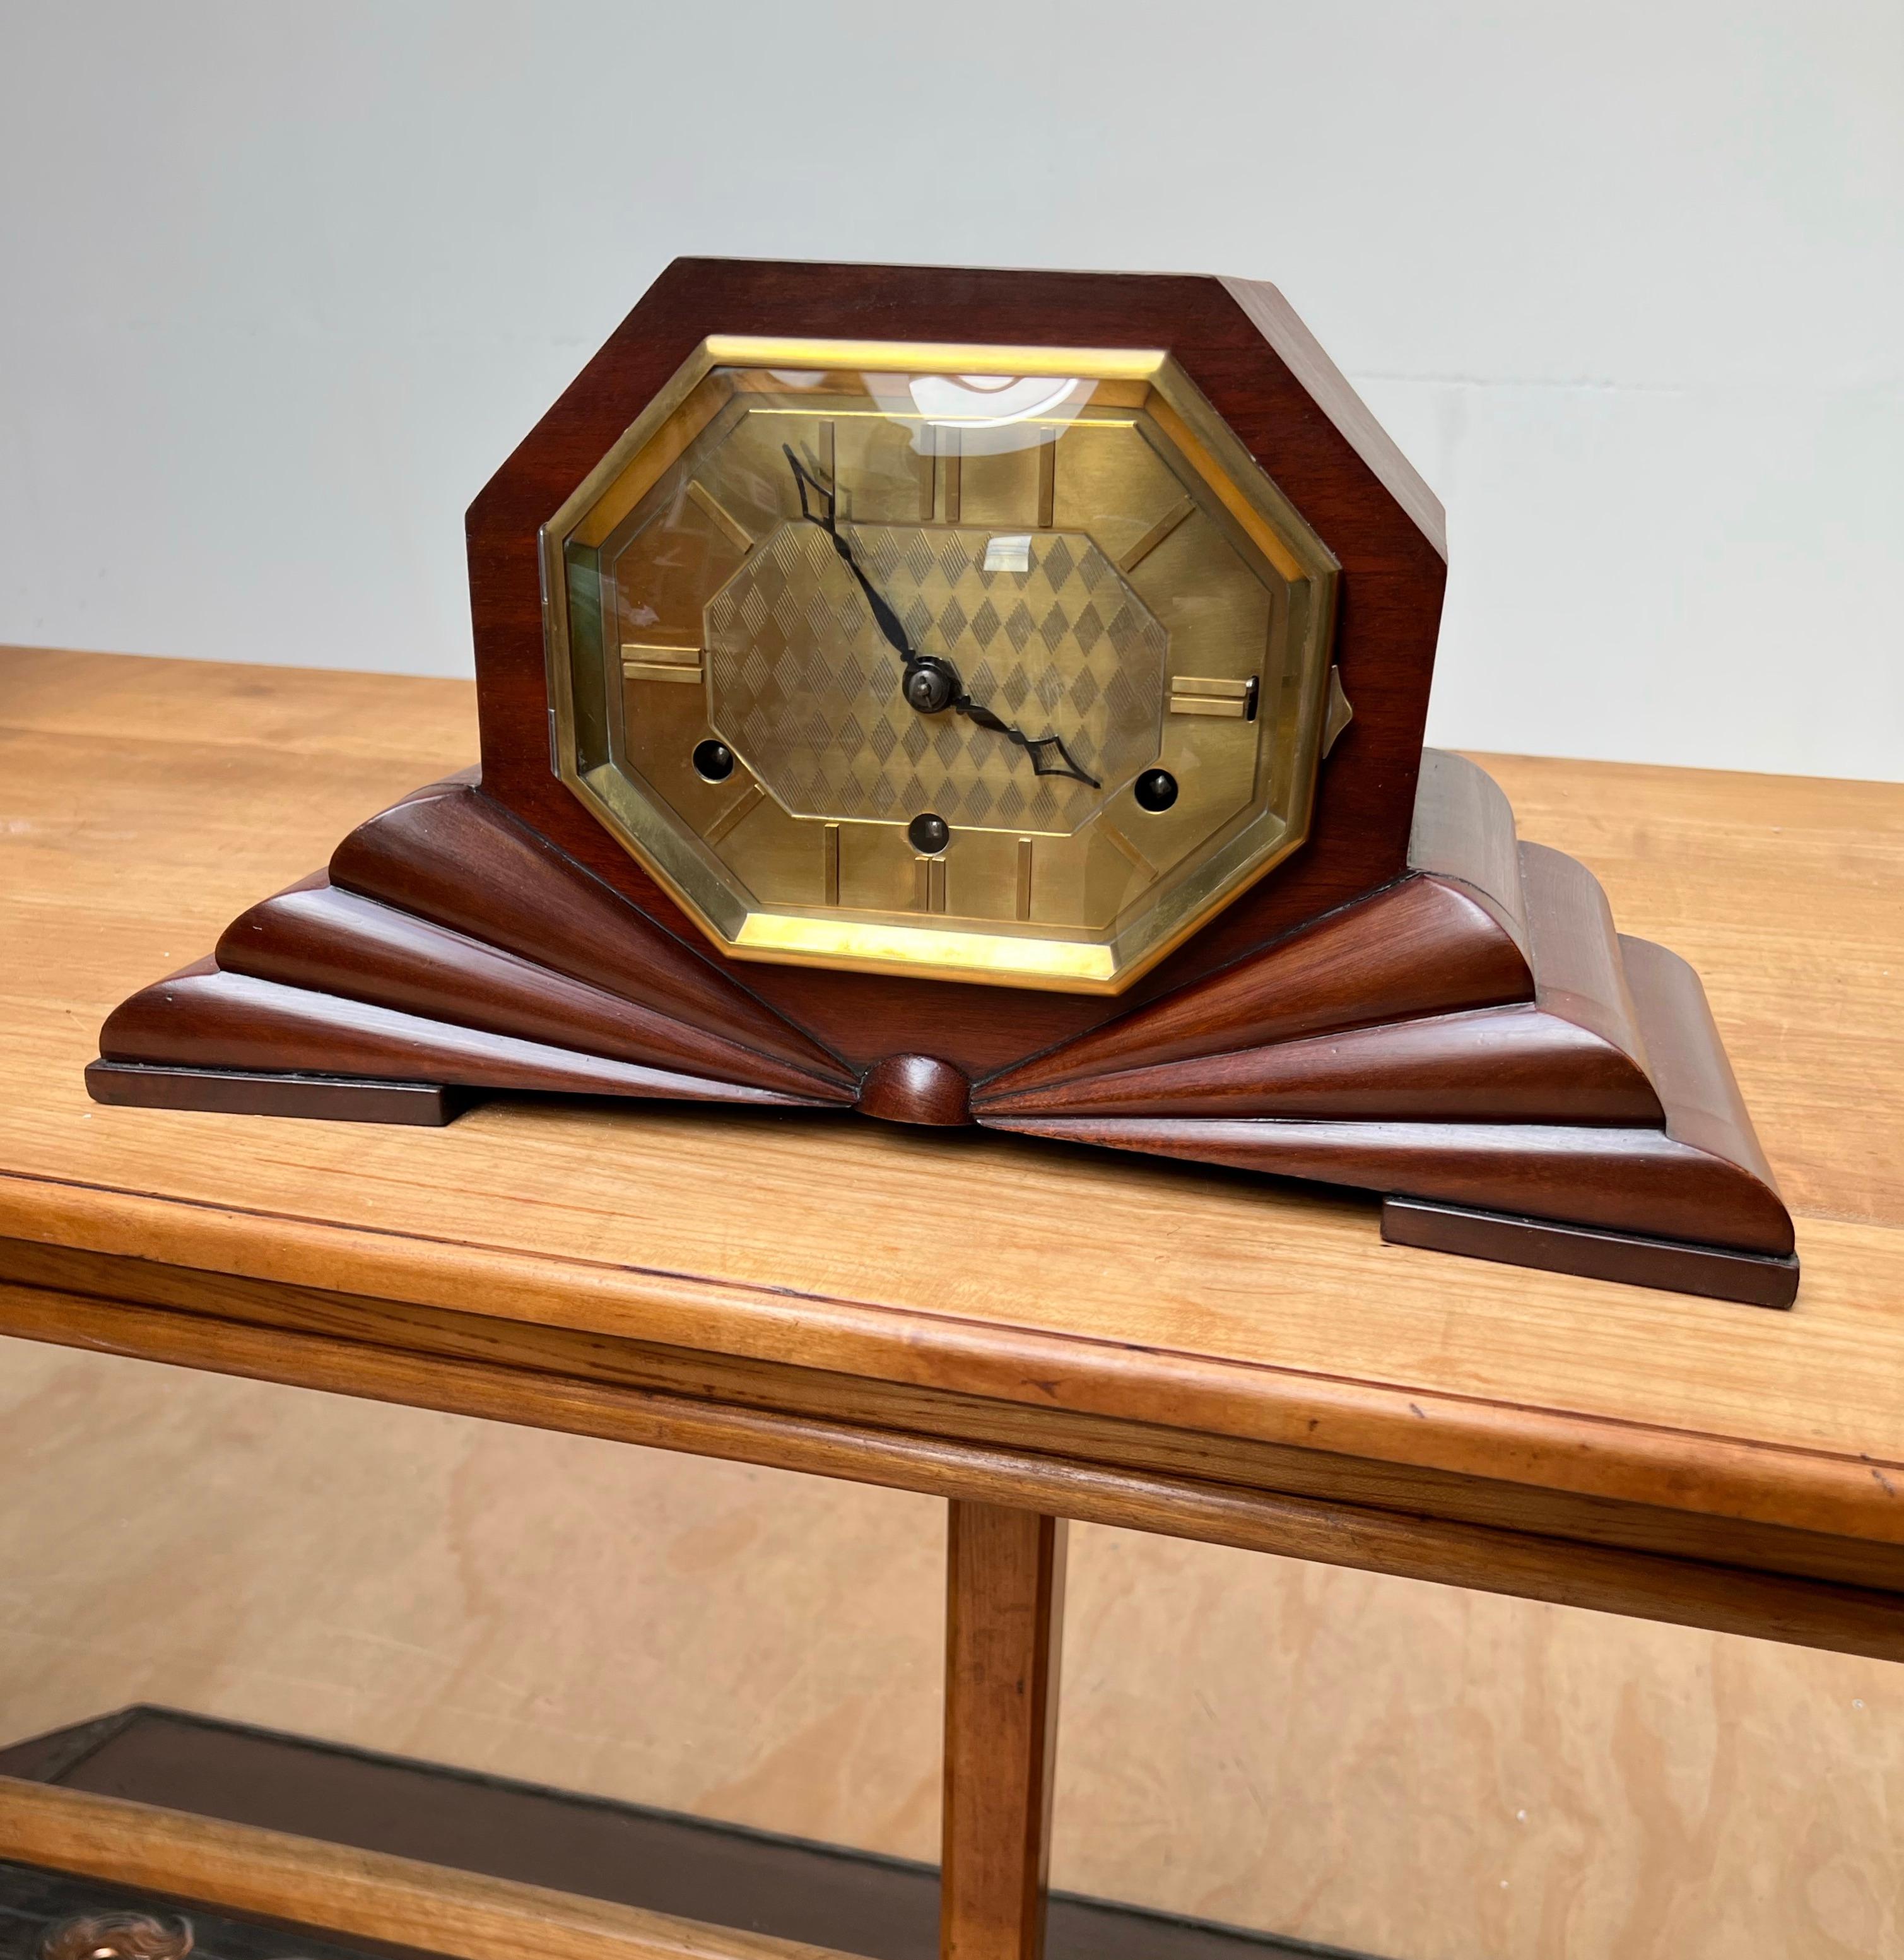 Pure Art Deco, Marvelous Design & Warm Color Nutwood Mantle / Desk / Table Clock For Sale 12